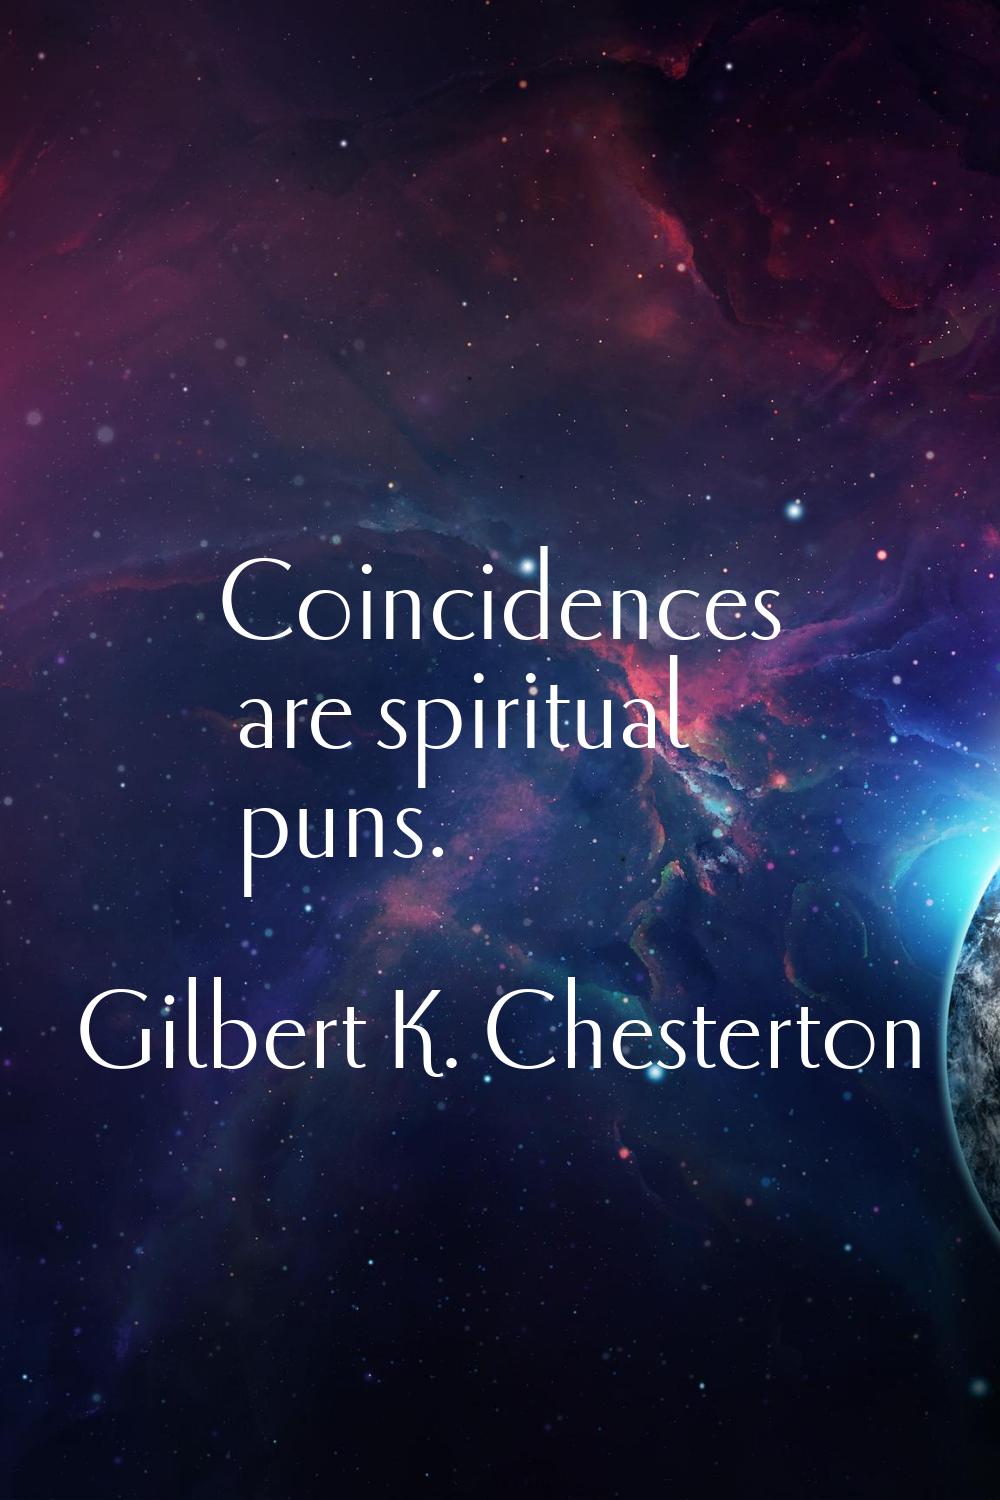 Coincidences are spiritual puns.